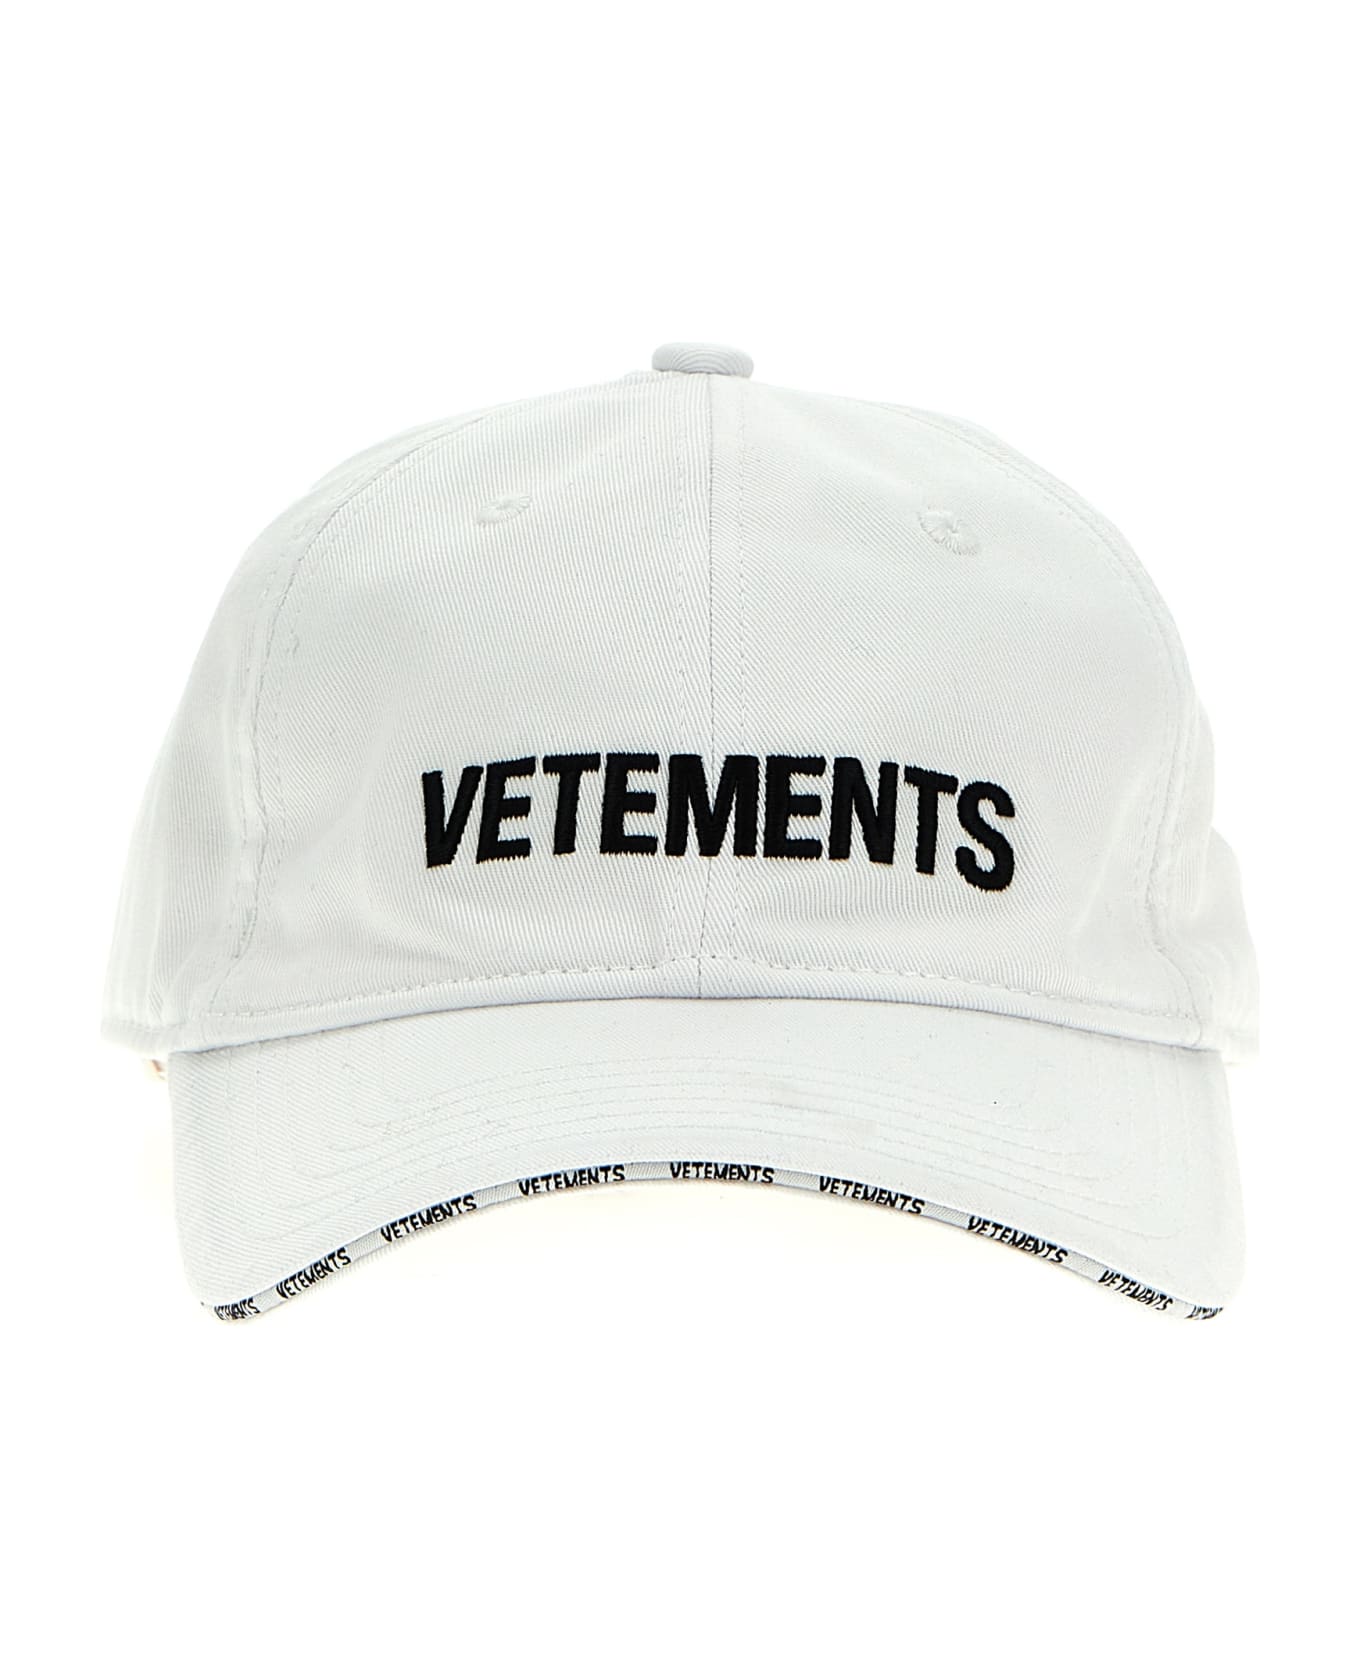 VETEMENTS Logo Cap - WHITE